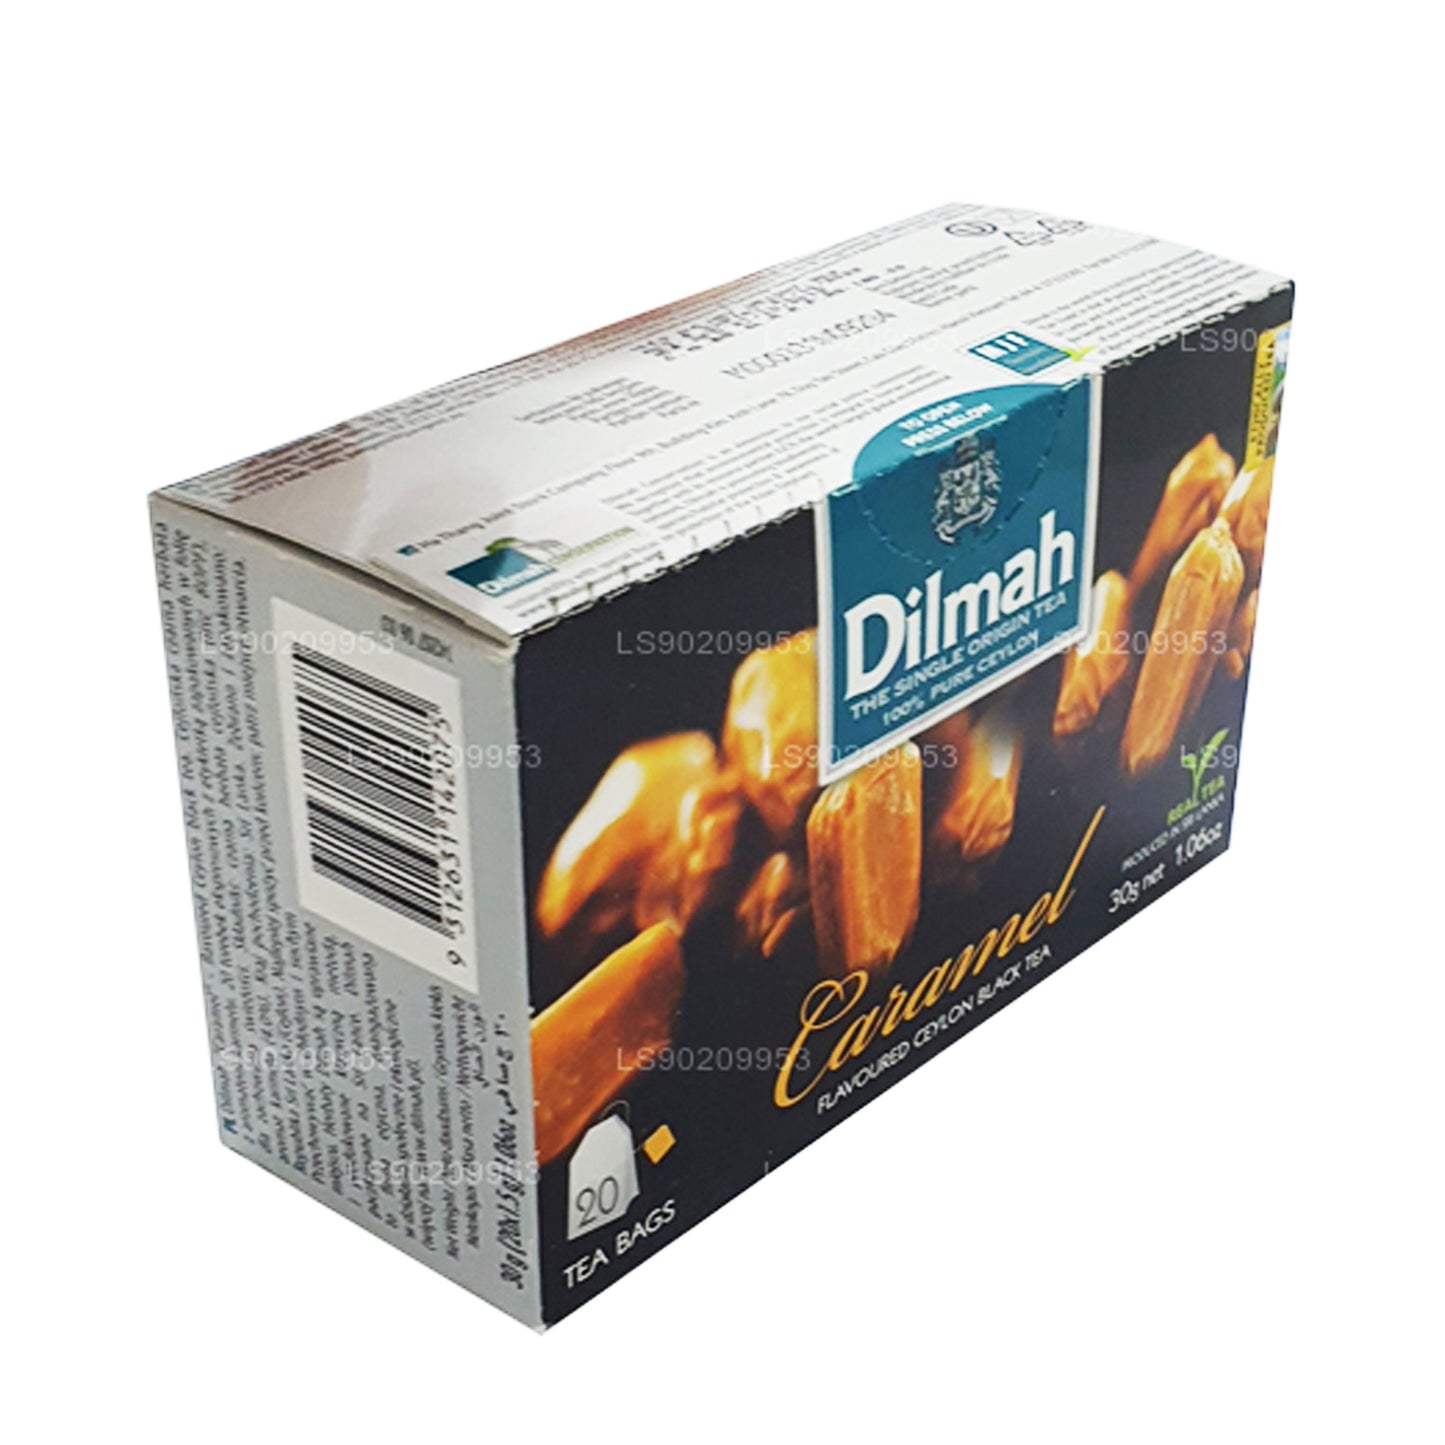 Dilmah 焦糖味茶 (40g) 20 个茶包